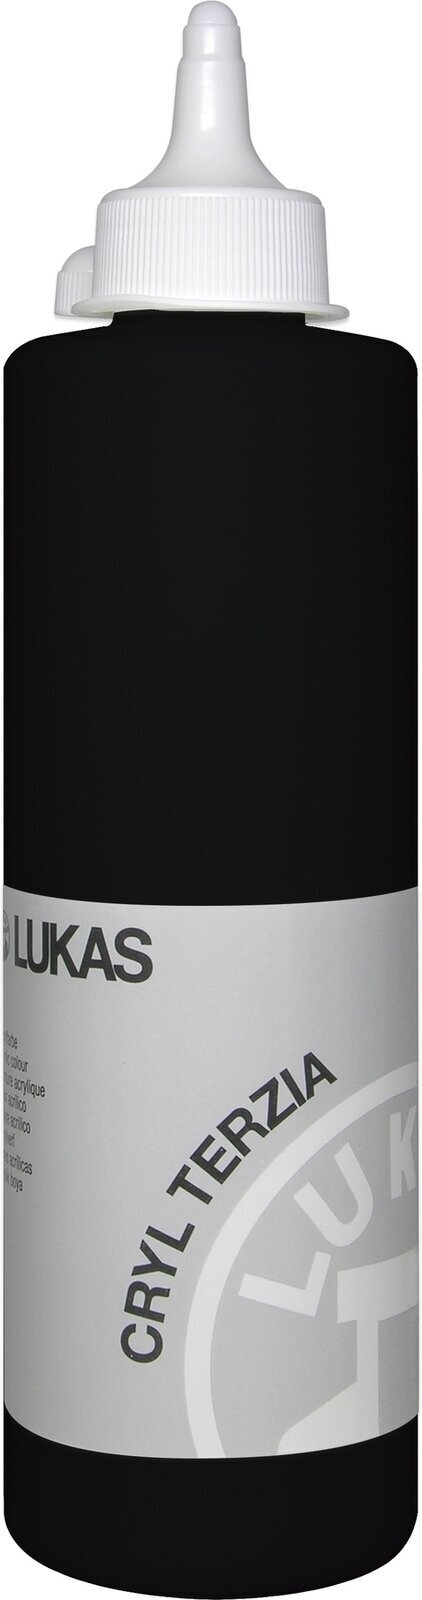 Acrylfarbe Lukas Cryl Terzia Acrylic Paint Plastic Bottle Acrylfarbe Ivory Black 500 ml 1 Stck